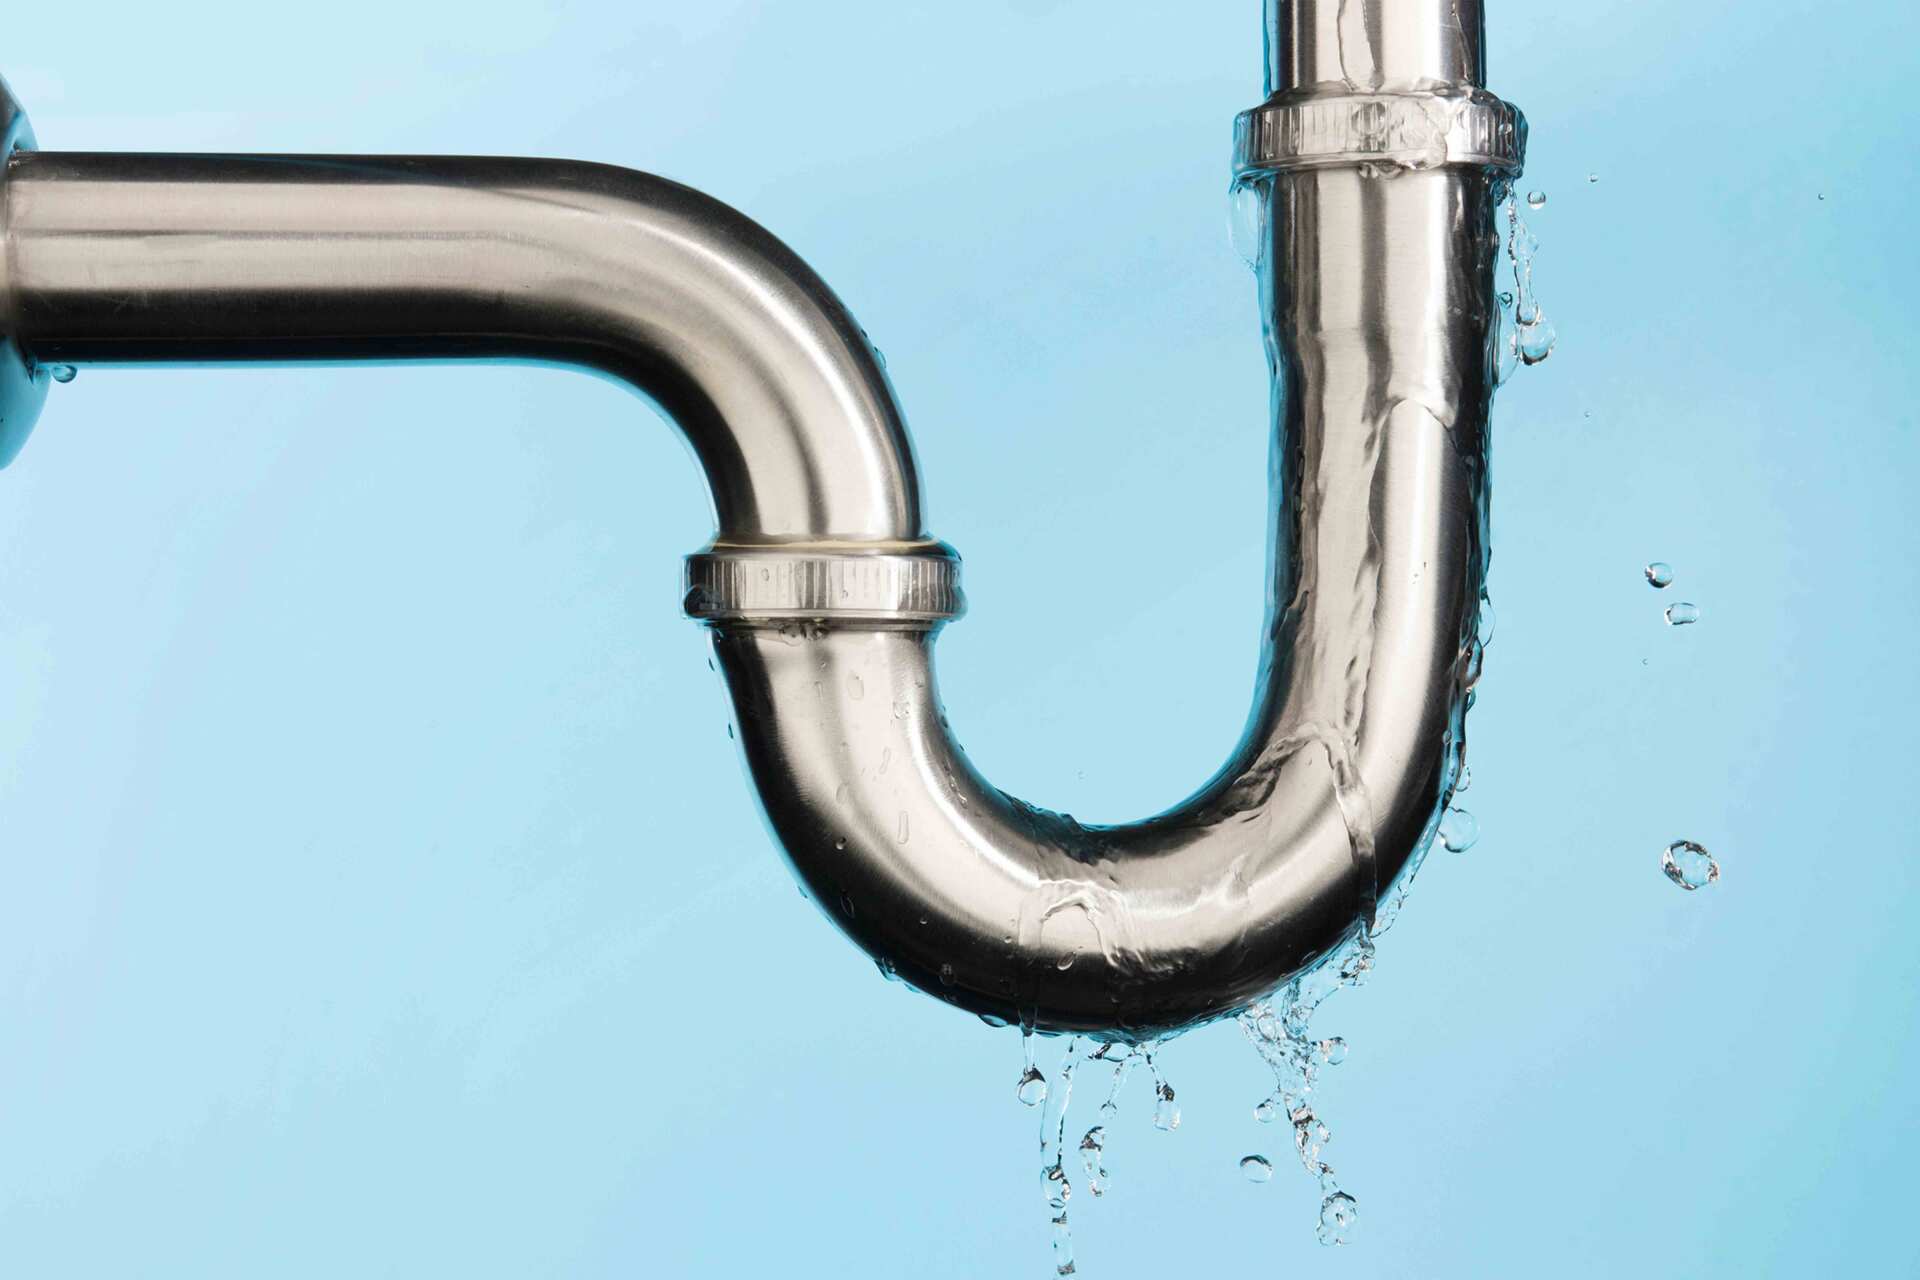 Leaking Of Water From Stainless Steel Sink Pipe - Warren, MI - Maple Lane Pest Control